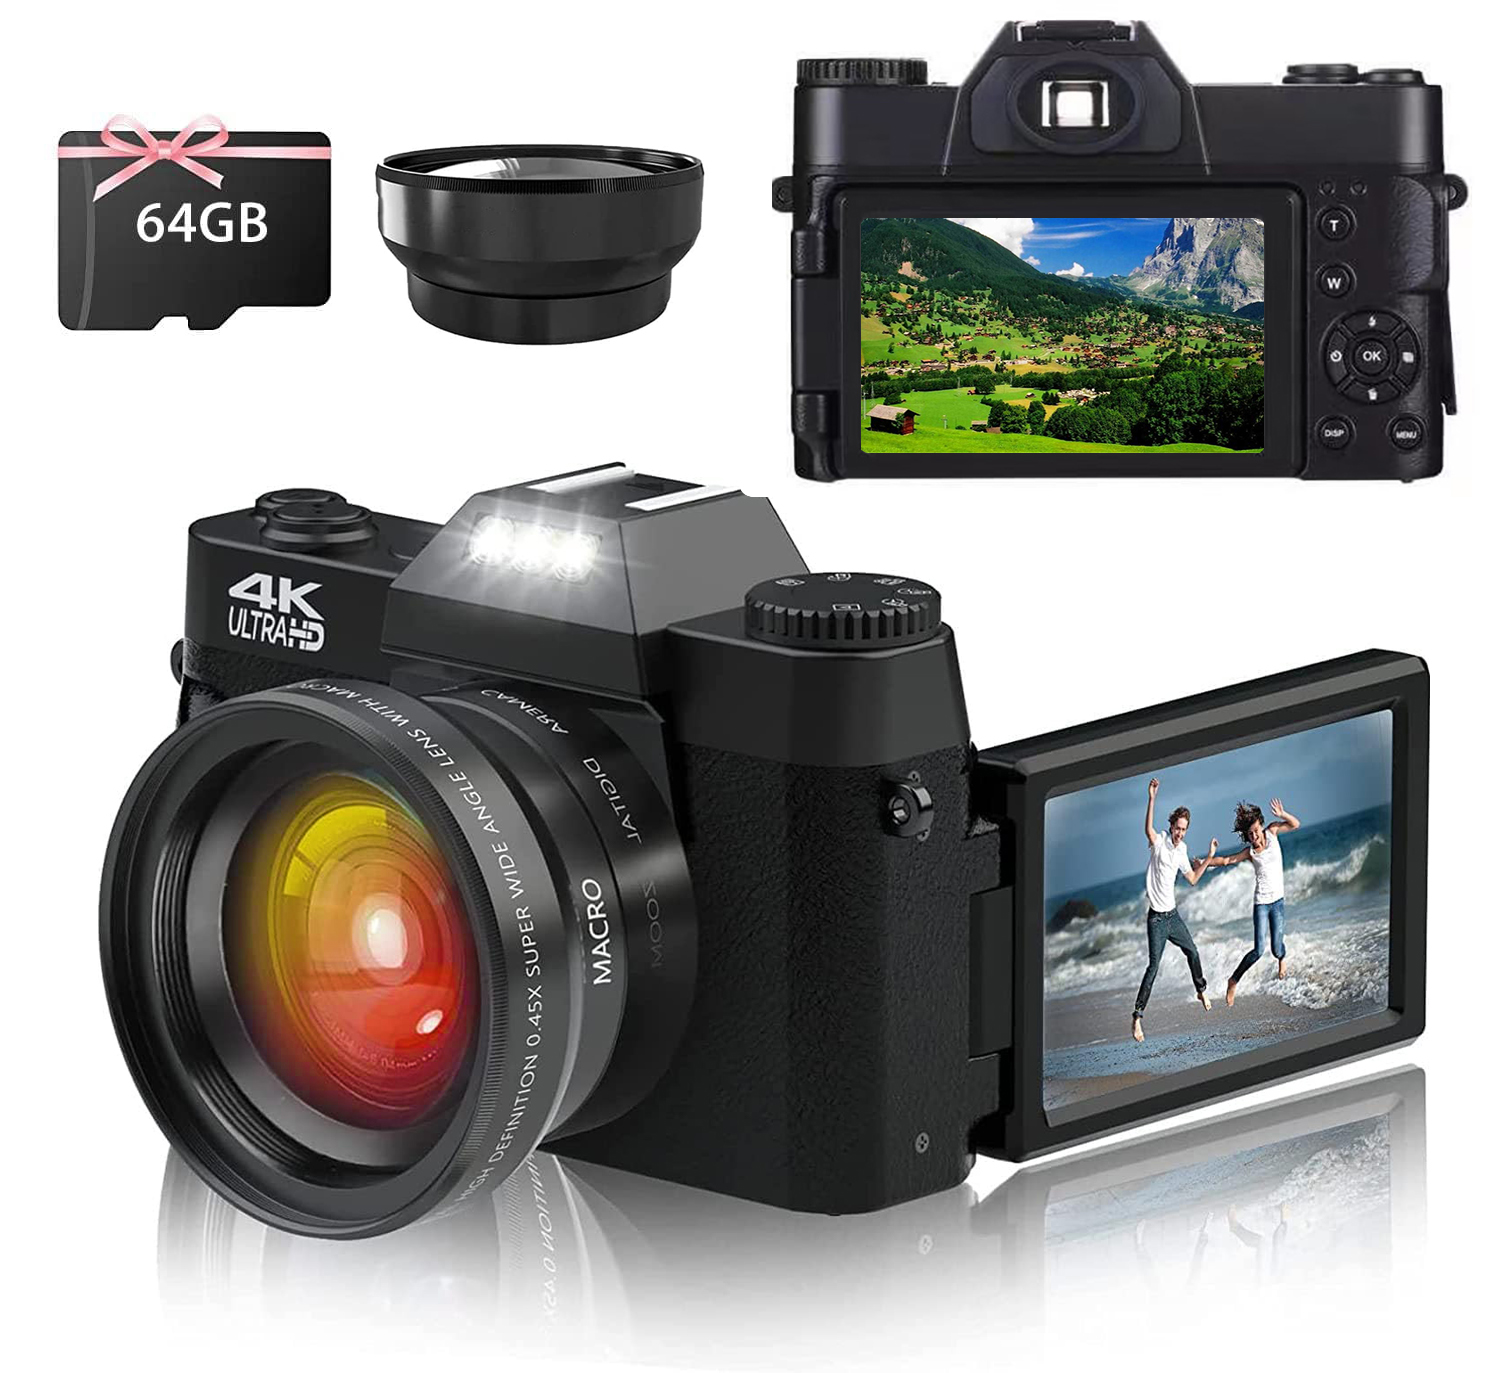 FINE LIFE Digital Speicherkarte 64G 30FPS 4K HD Schwarz Digitalkamera PRO Kamera